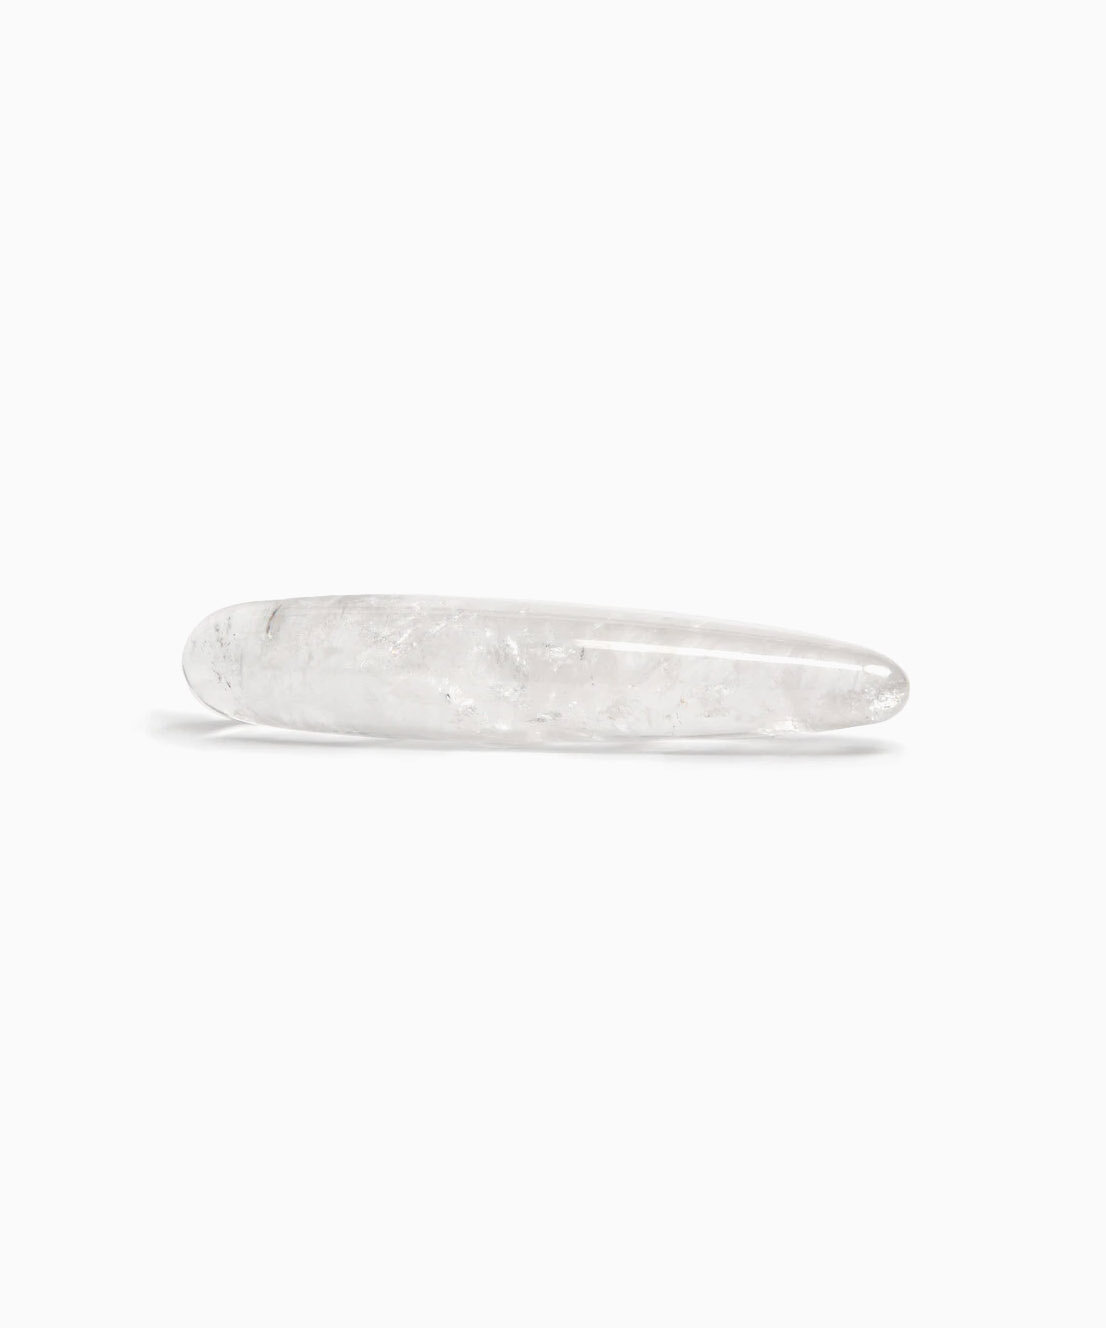 faye-bergkristall-3cm-kristalldildo-liebelei-shop.jpg